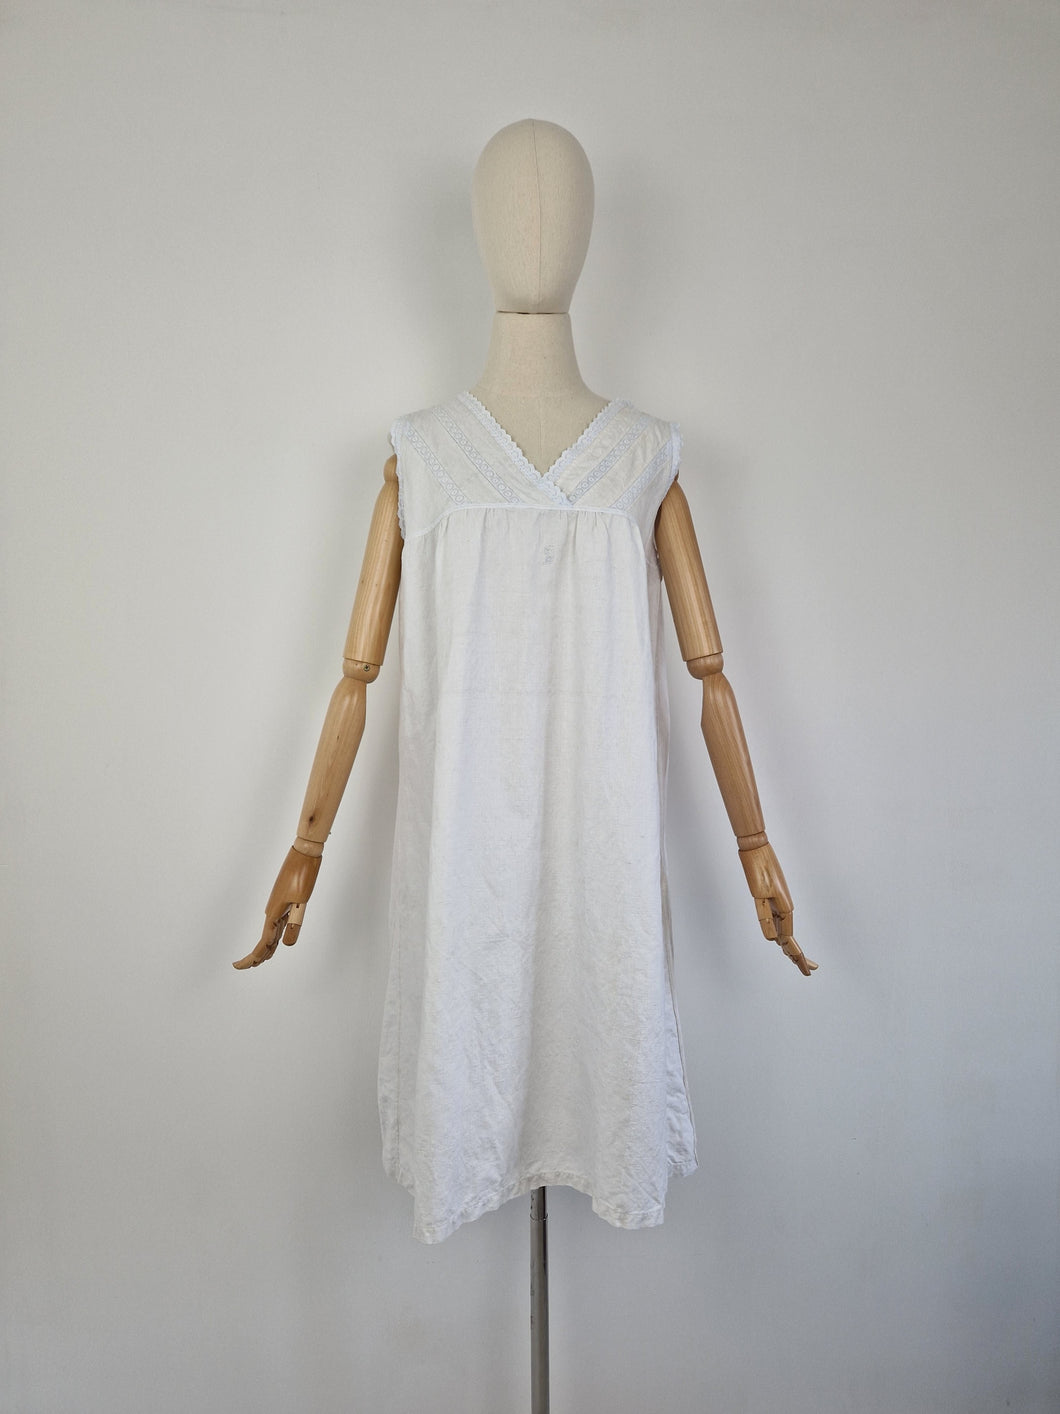 Antique raw cotton dress